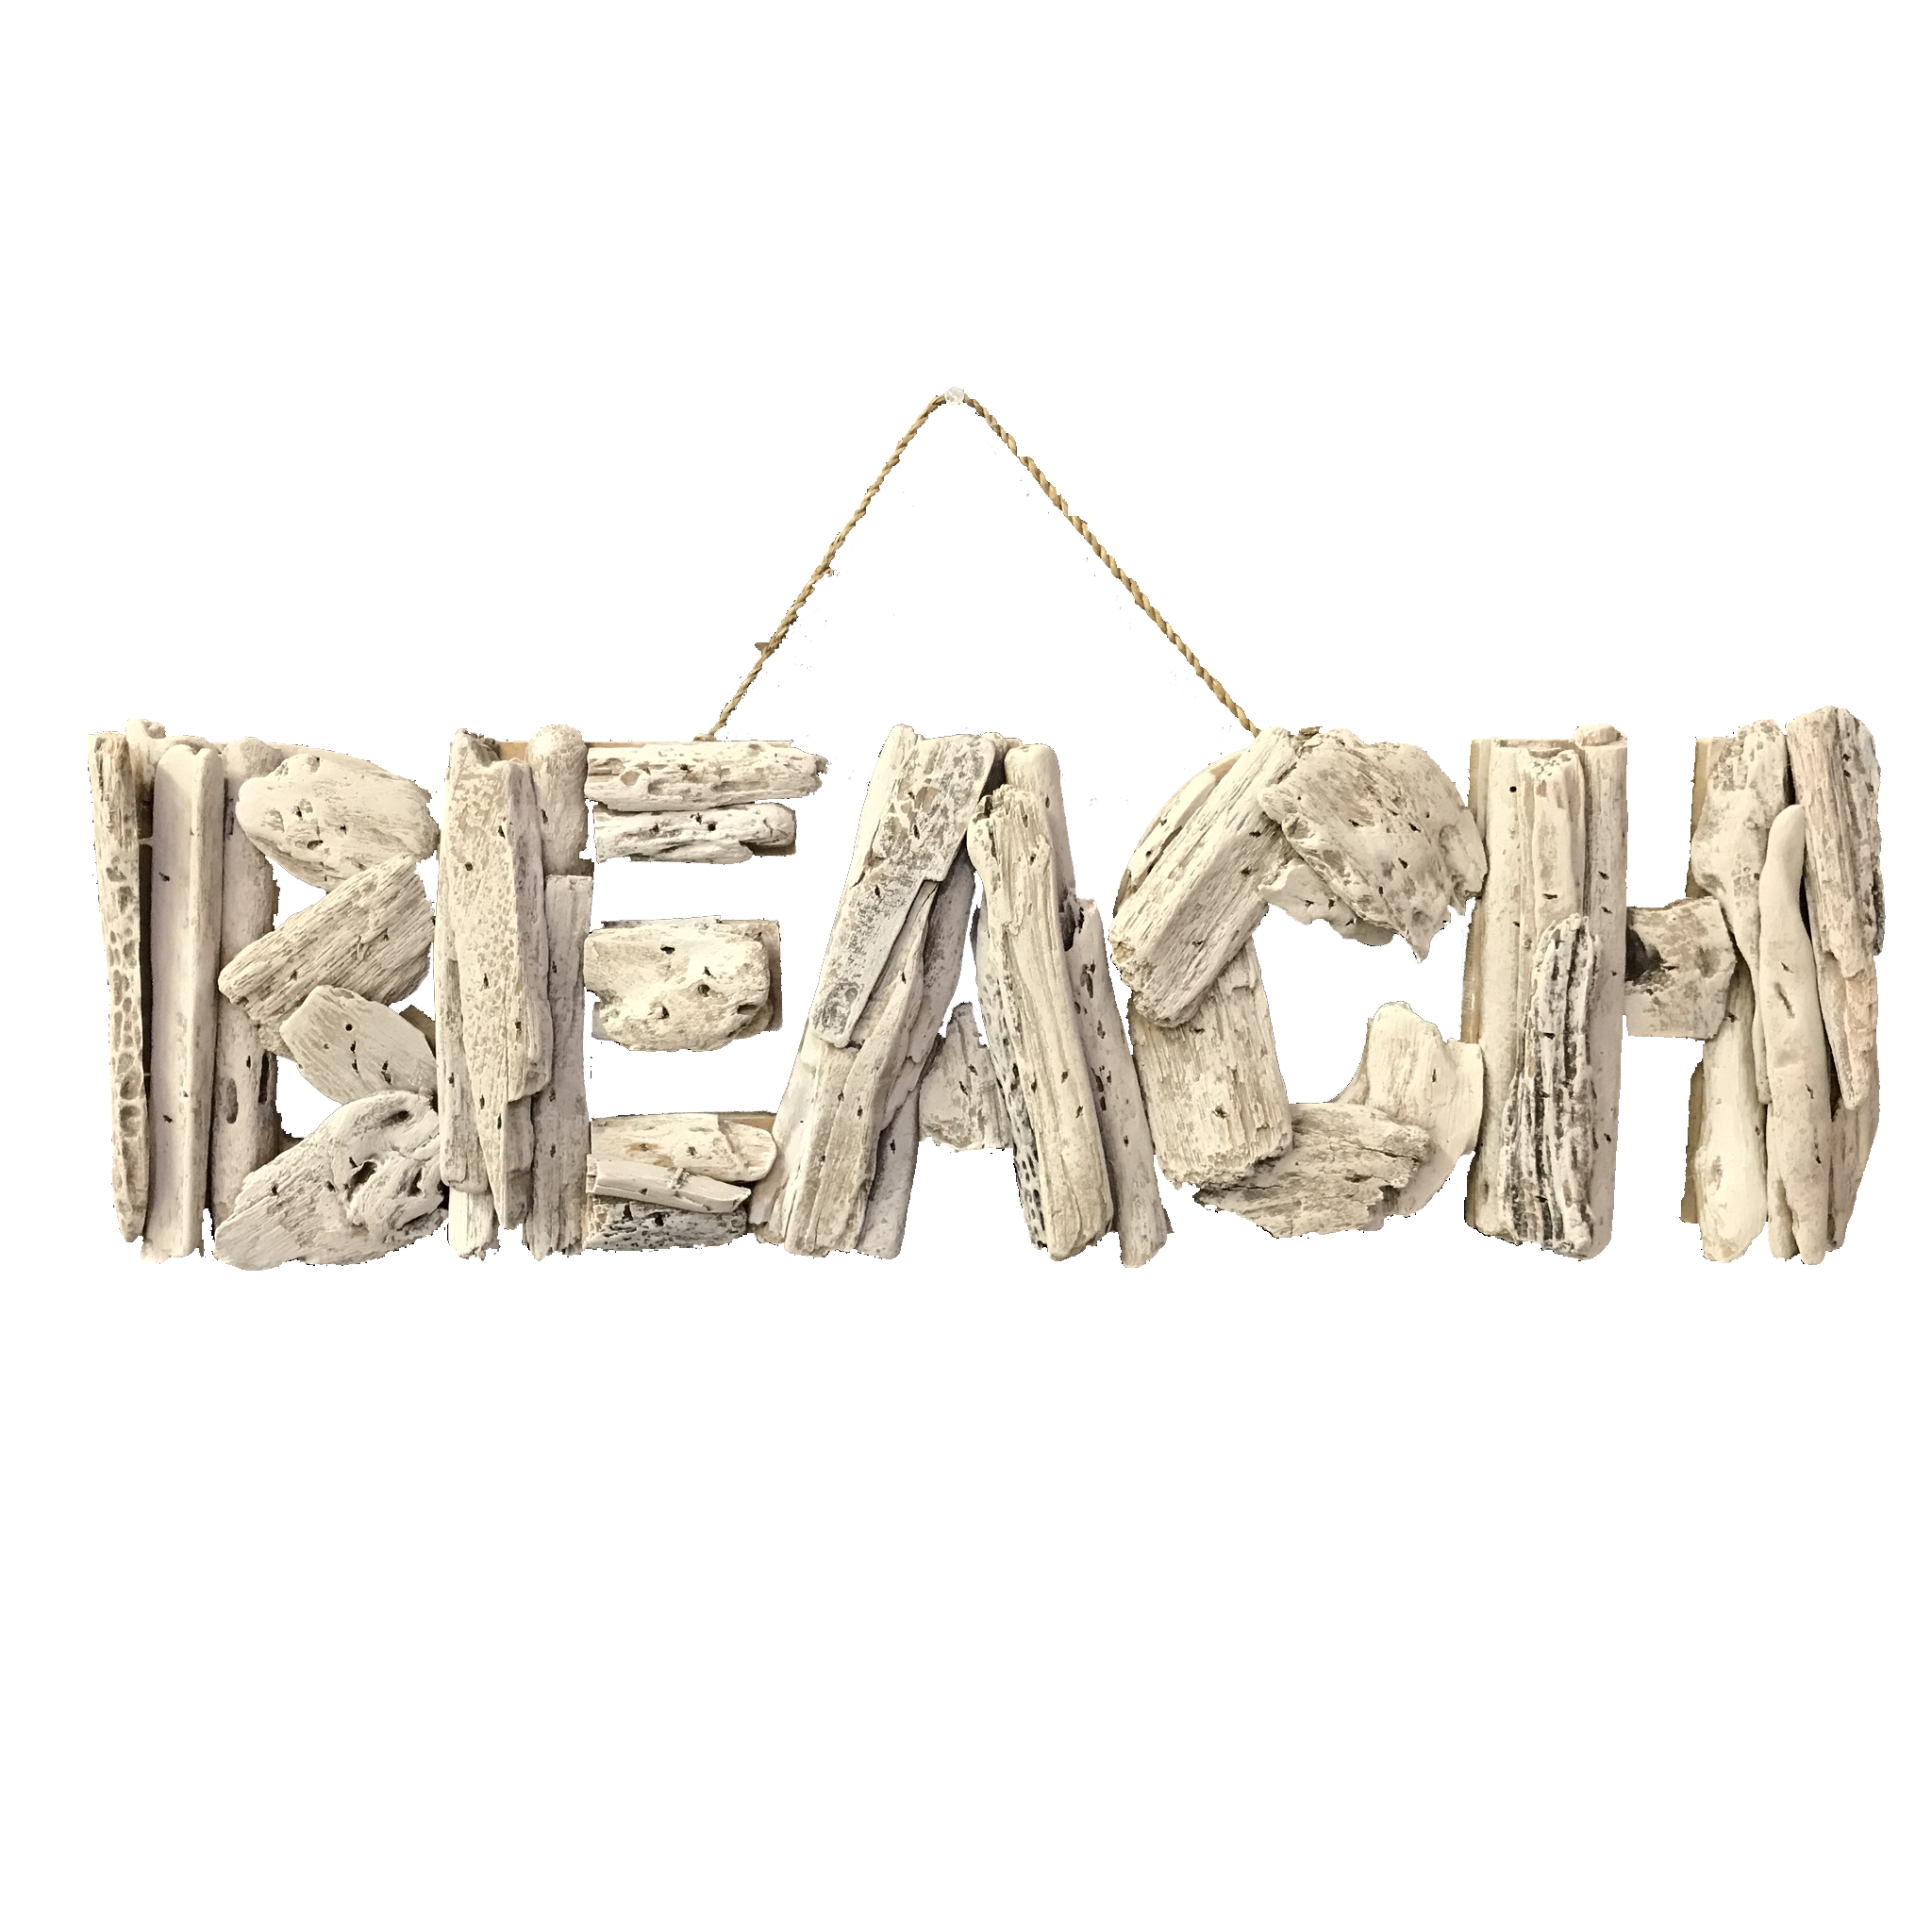 Driftwood word "BEACH"